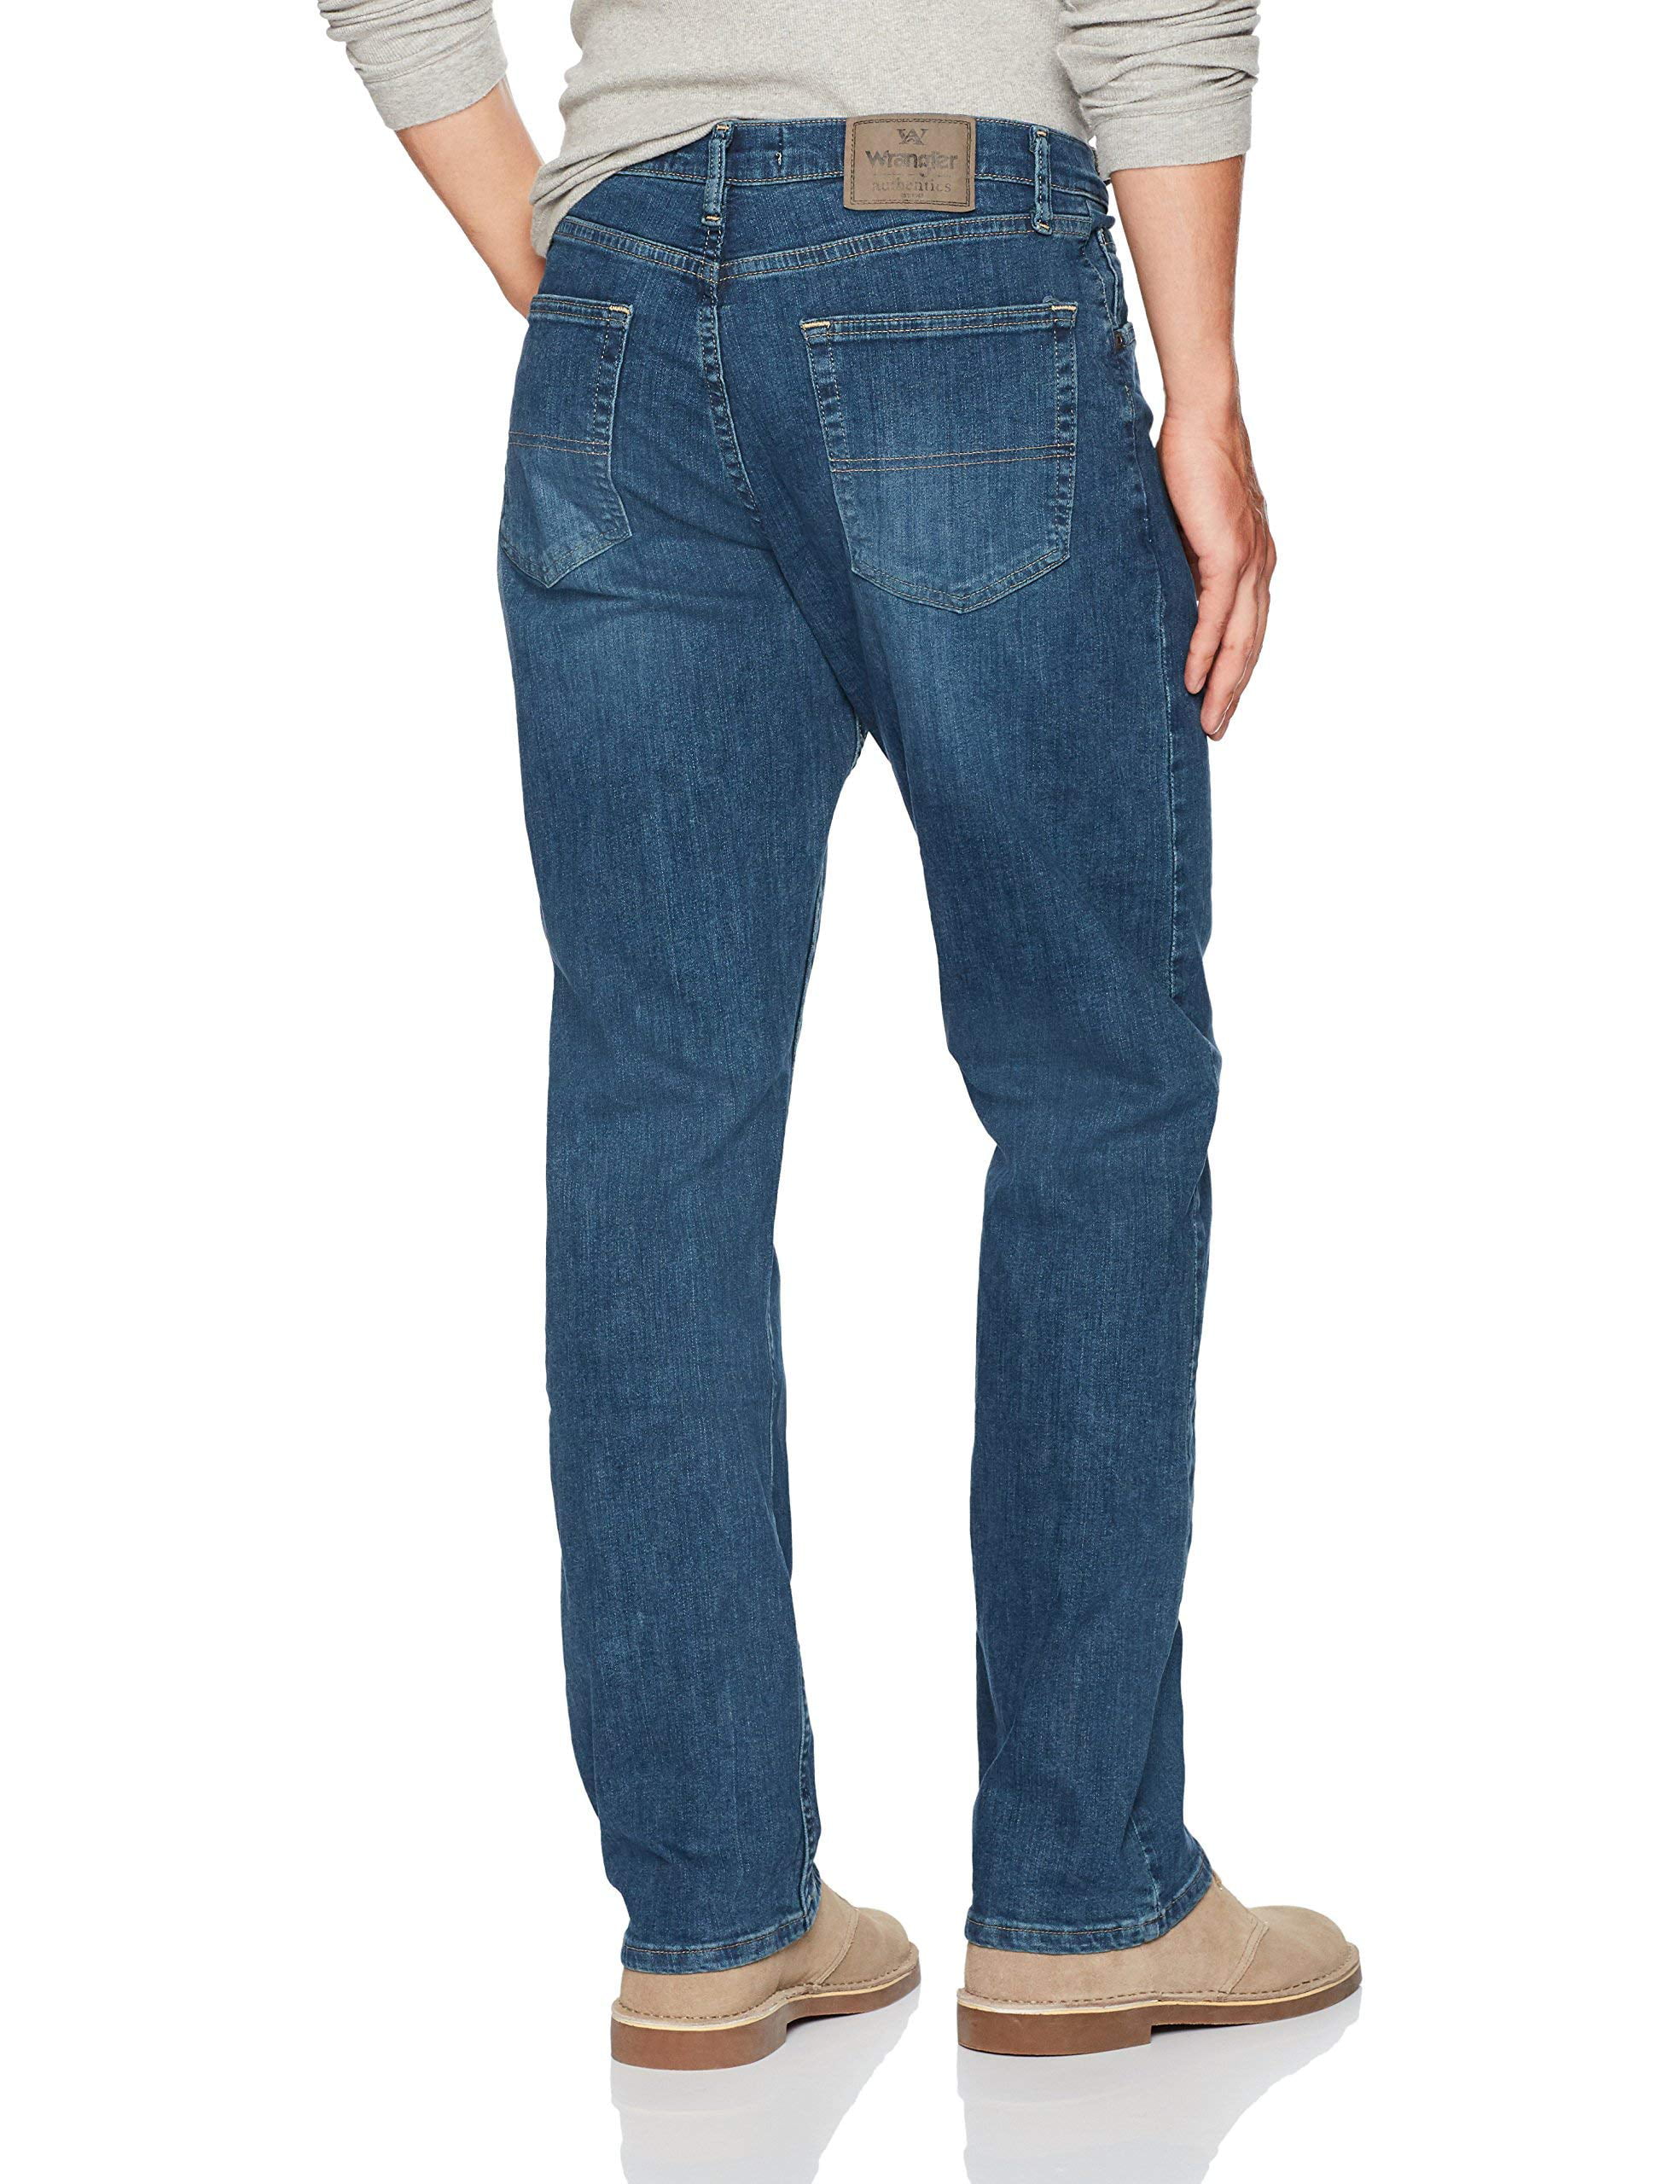 J Brand Regular 36 Size Jeans for Men for sale